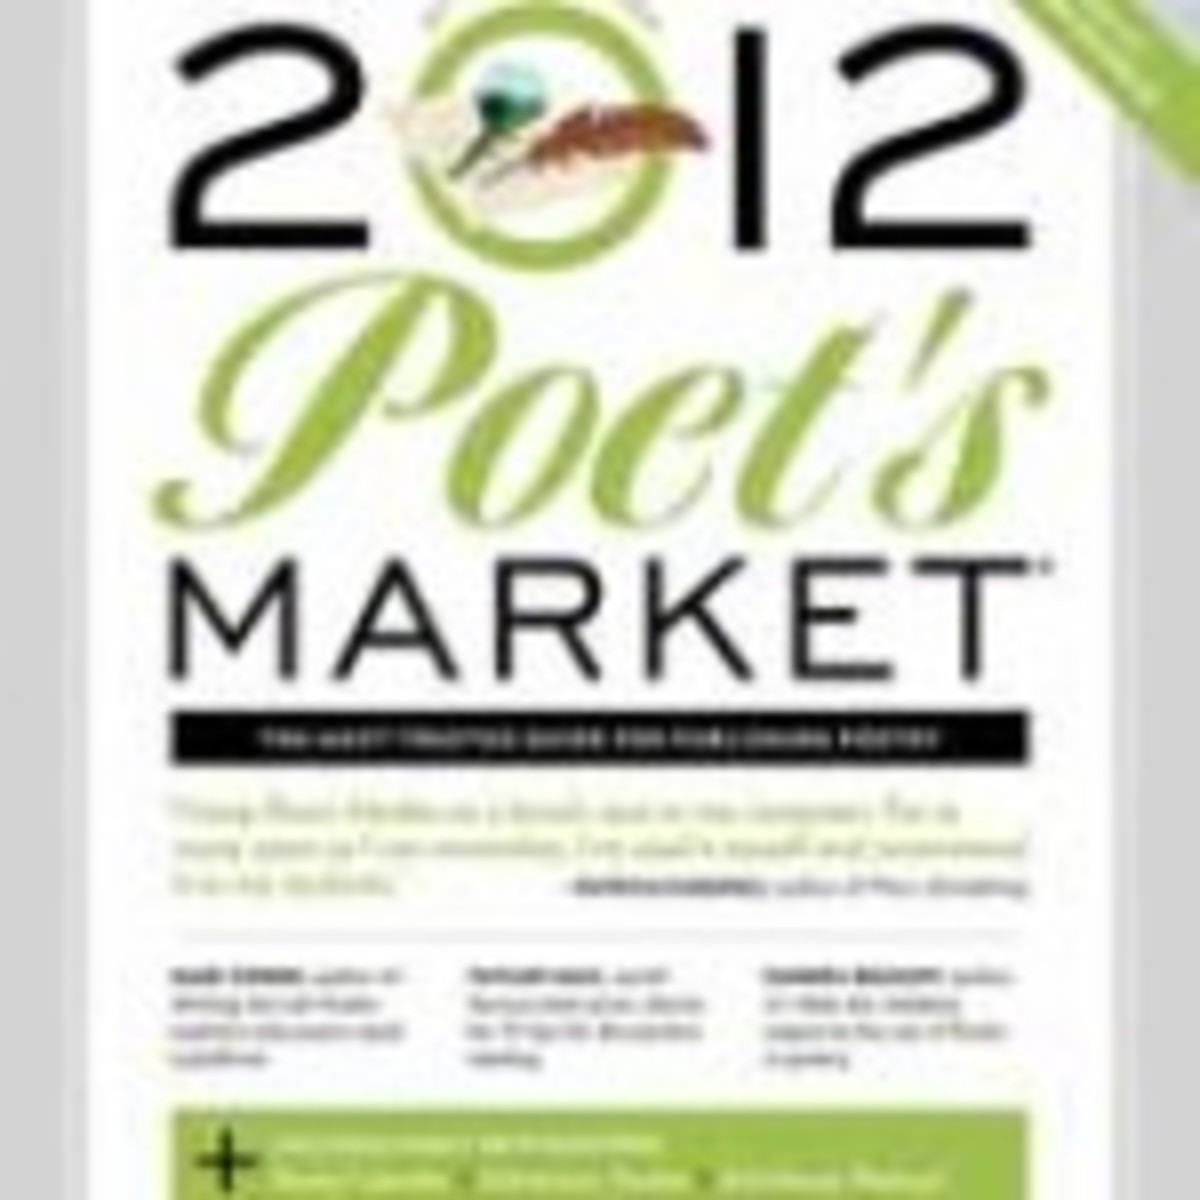 2012 Poet's Market cover